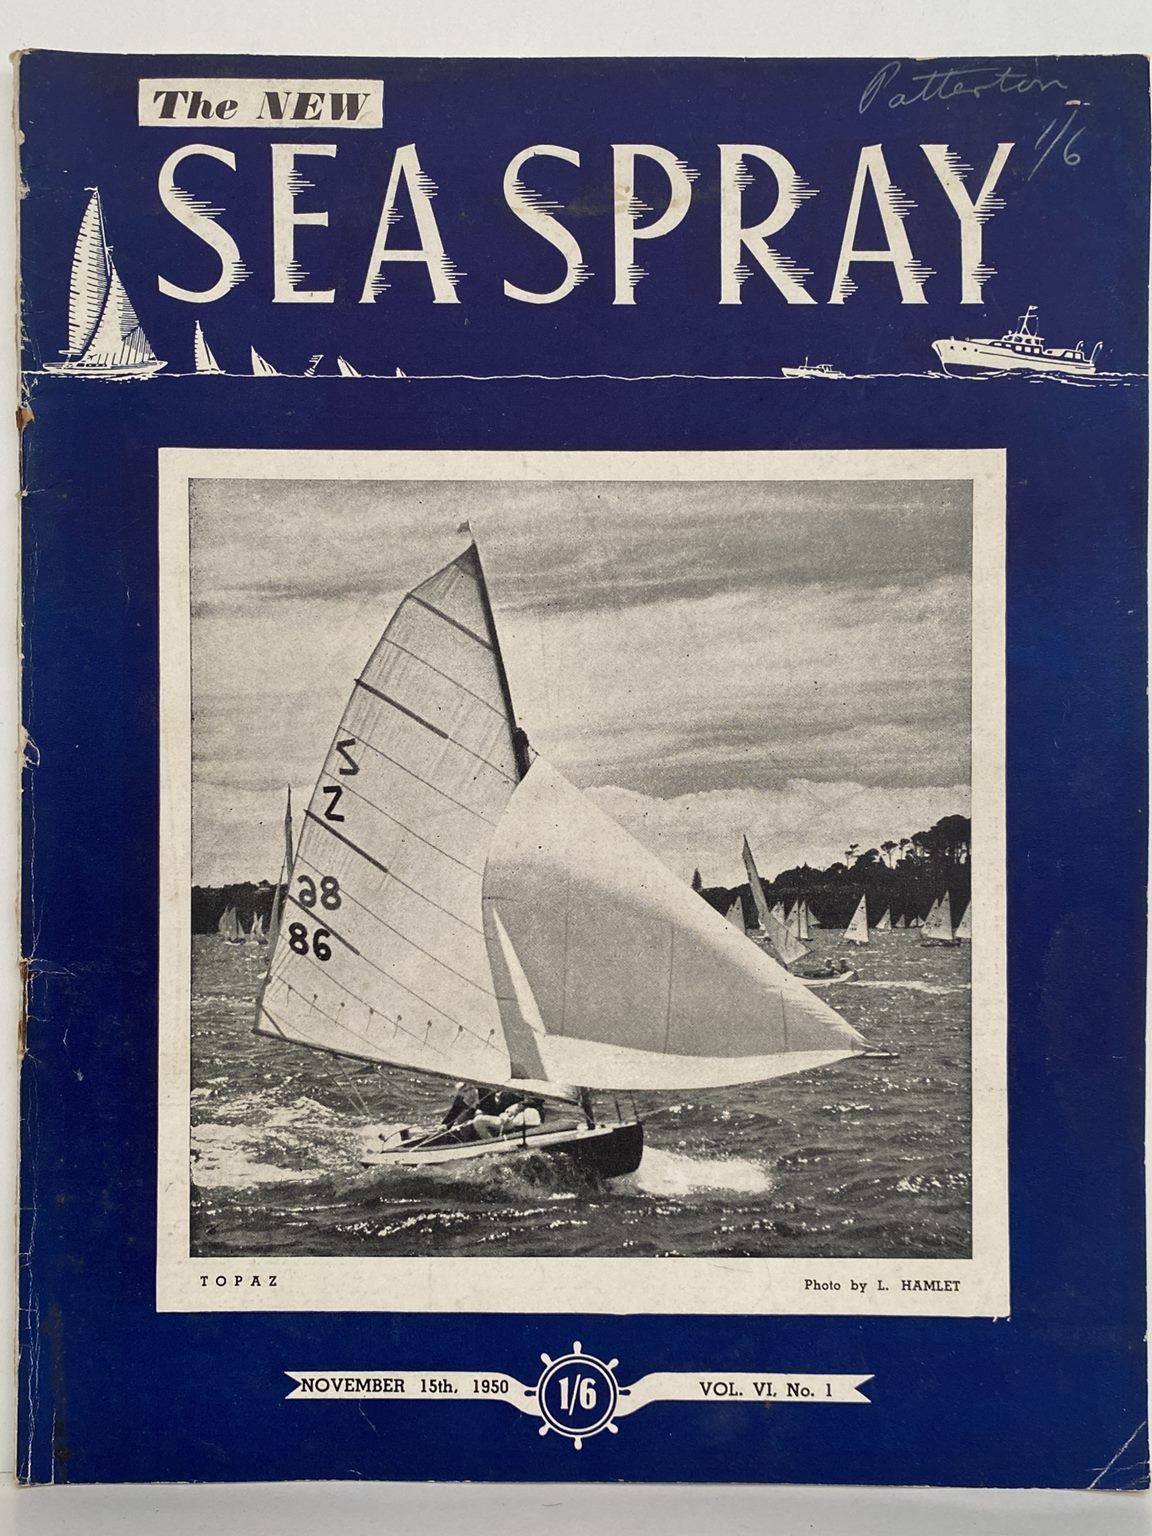 VINTAGE MAGAZINE: Sea Spray - Vol. 6, No. 1 - November 1950